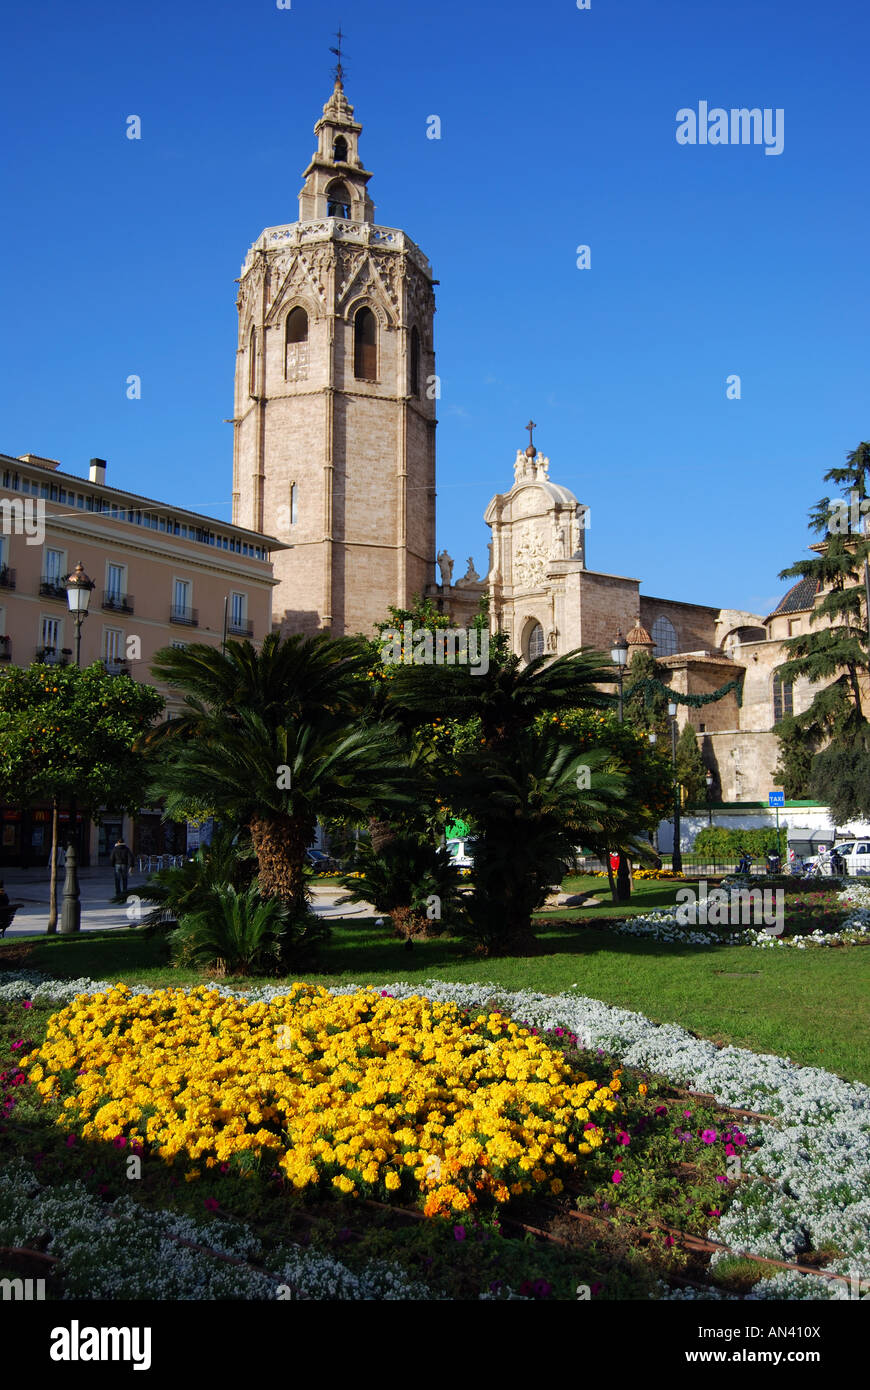 The Cathedral and Belfry Tower, Plaza de La Reina, Valencia, Costa del Azahar, Valencia Province, Spain Stock Photo